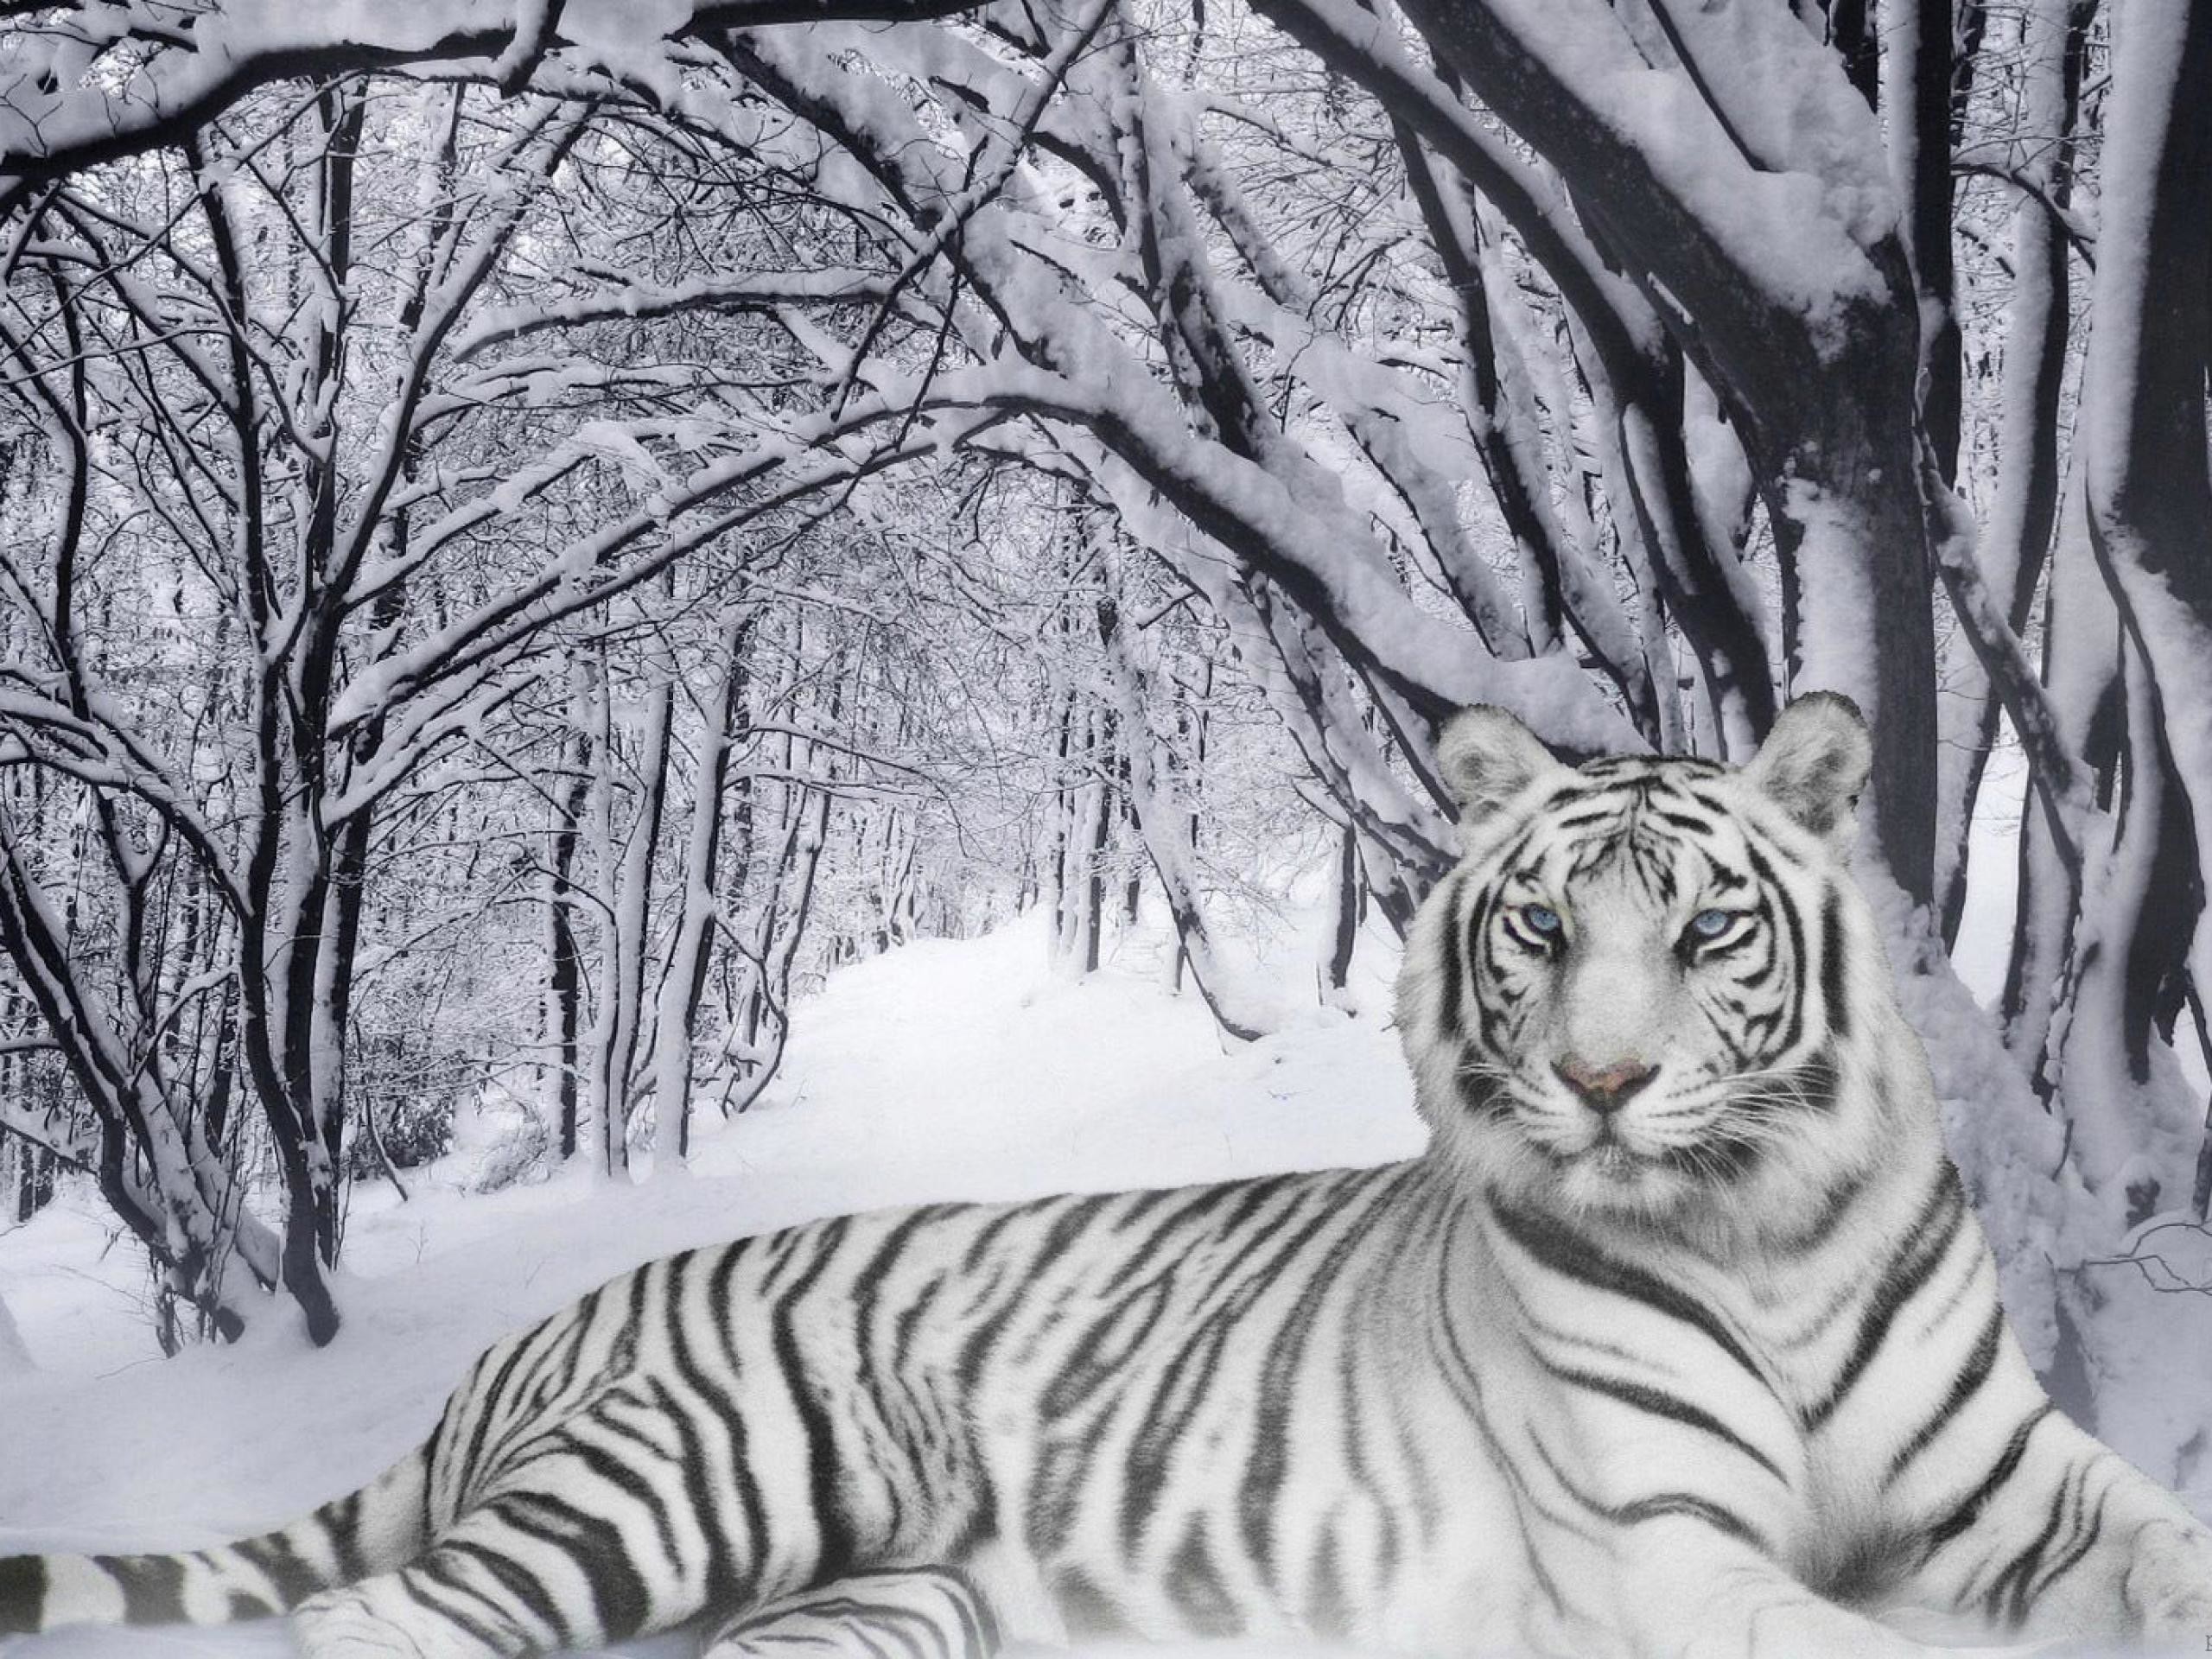 2560x1920 Tiger Wallpaper Free: White Tiger Wallpapers #3035 |.Ssofc